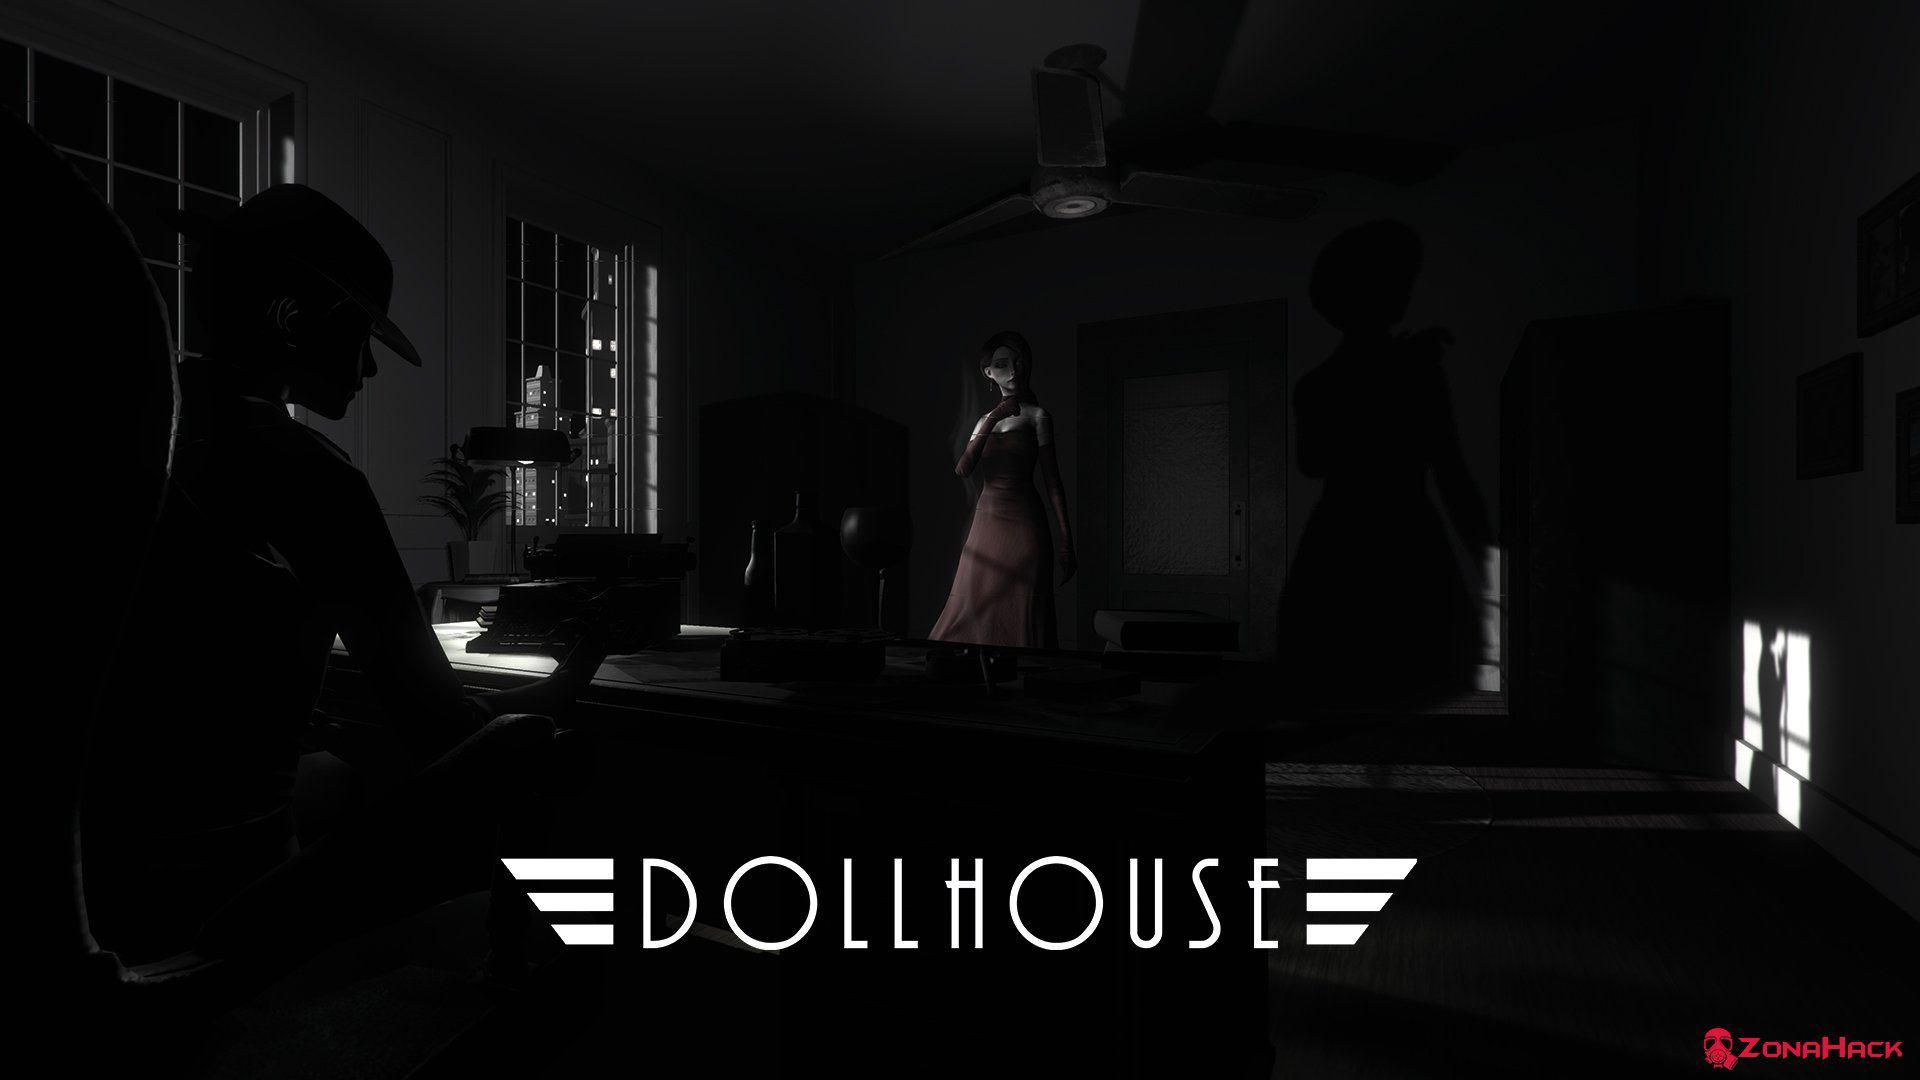 Dollhouse: Руководство запуска по сети